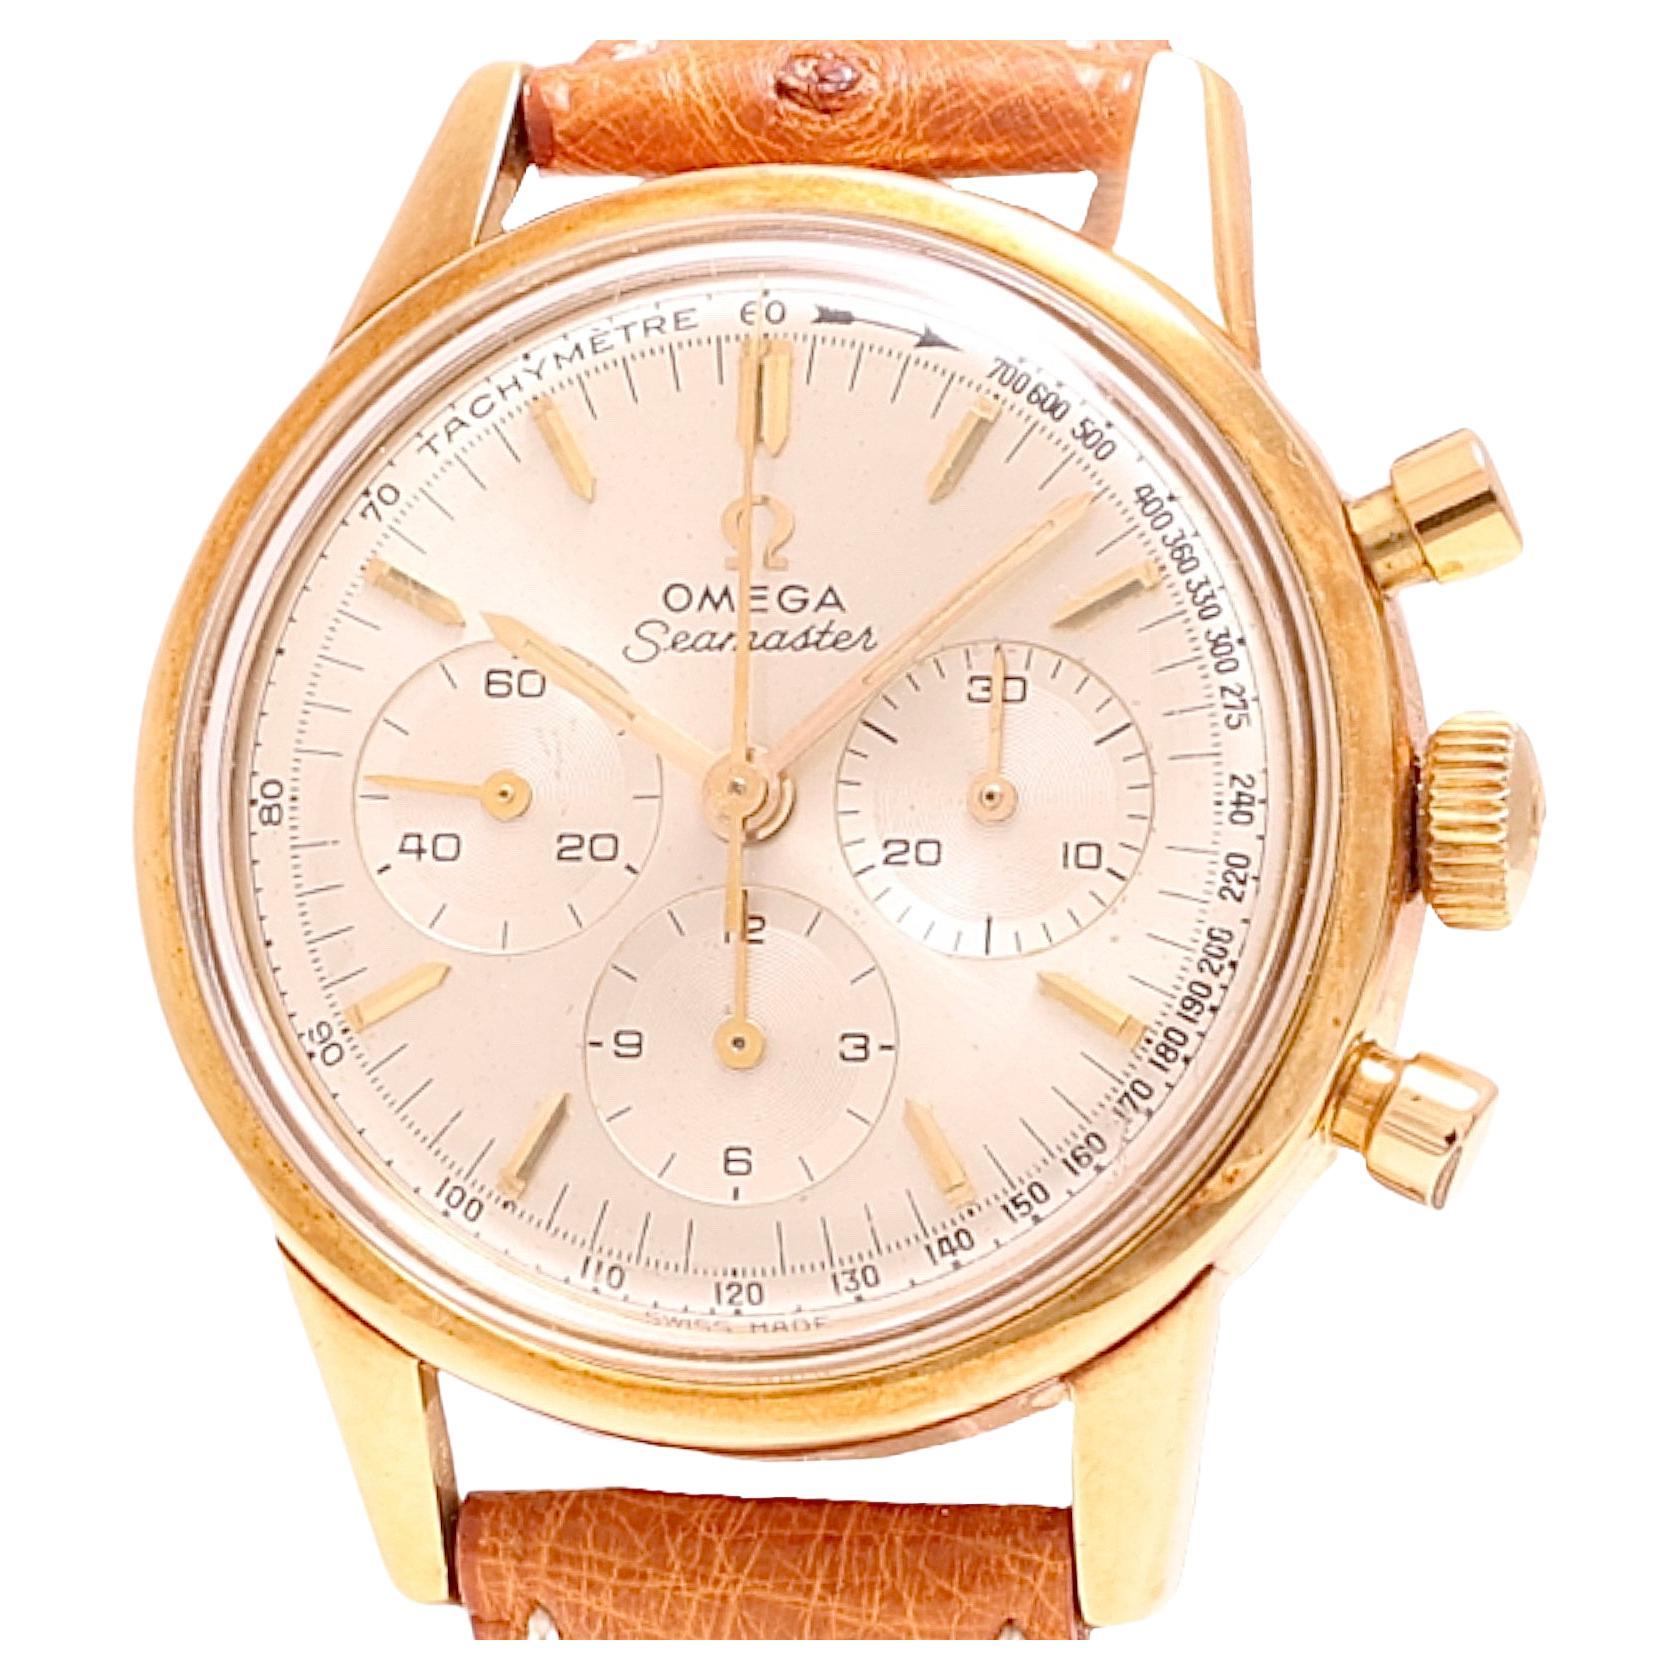 Omega Seamaster Chronograph Waterproof Wrist Watch Cal 321